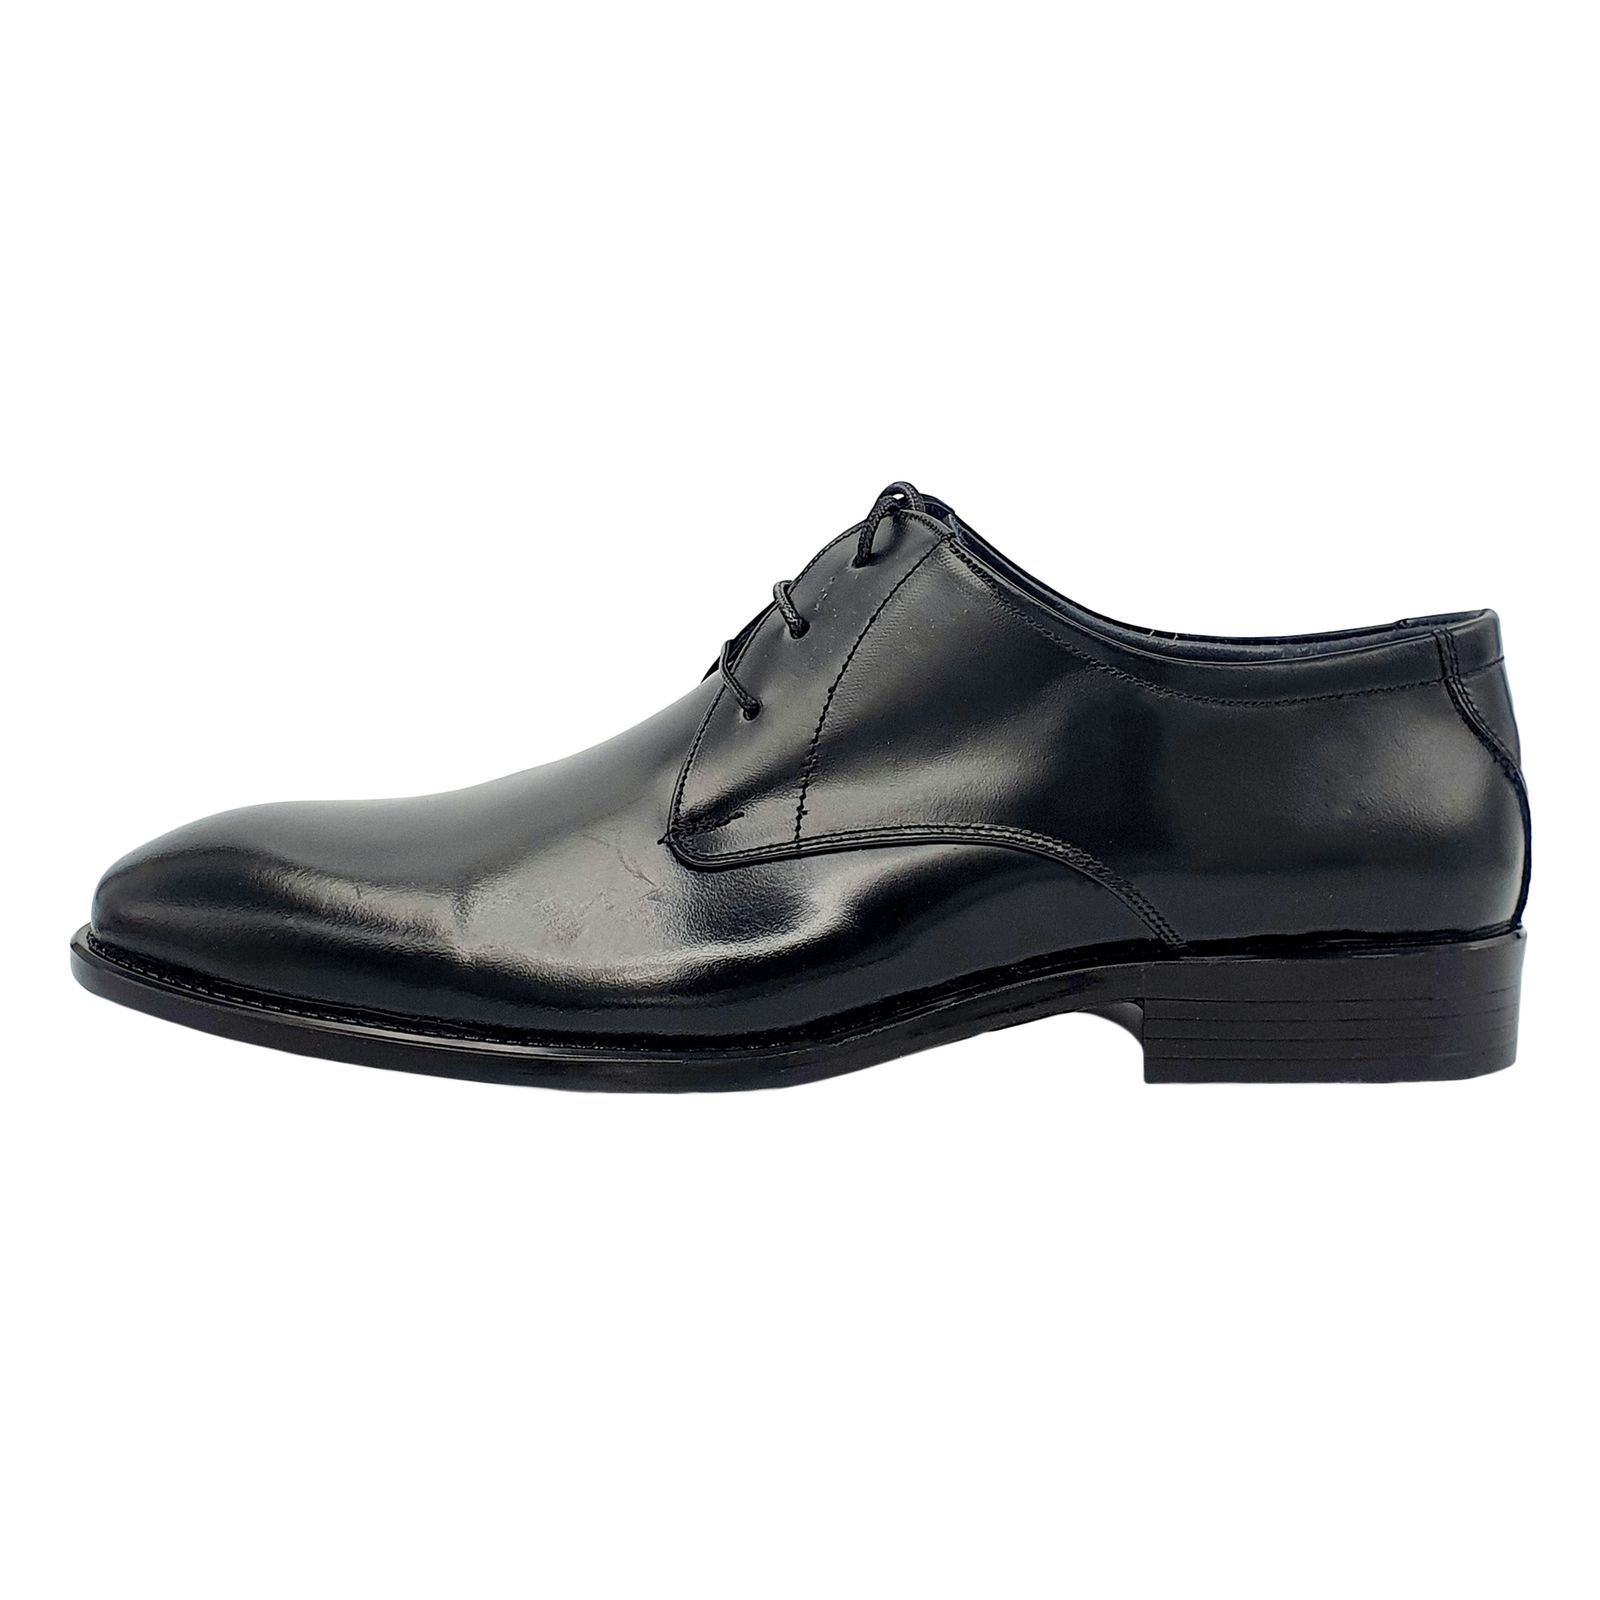 کفش مردانه گالا مدل BS کد D1109 -  - 1